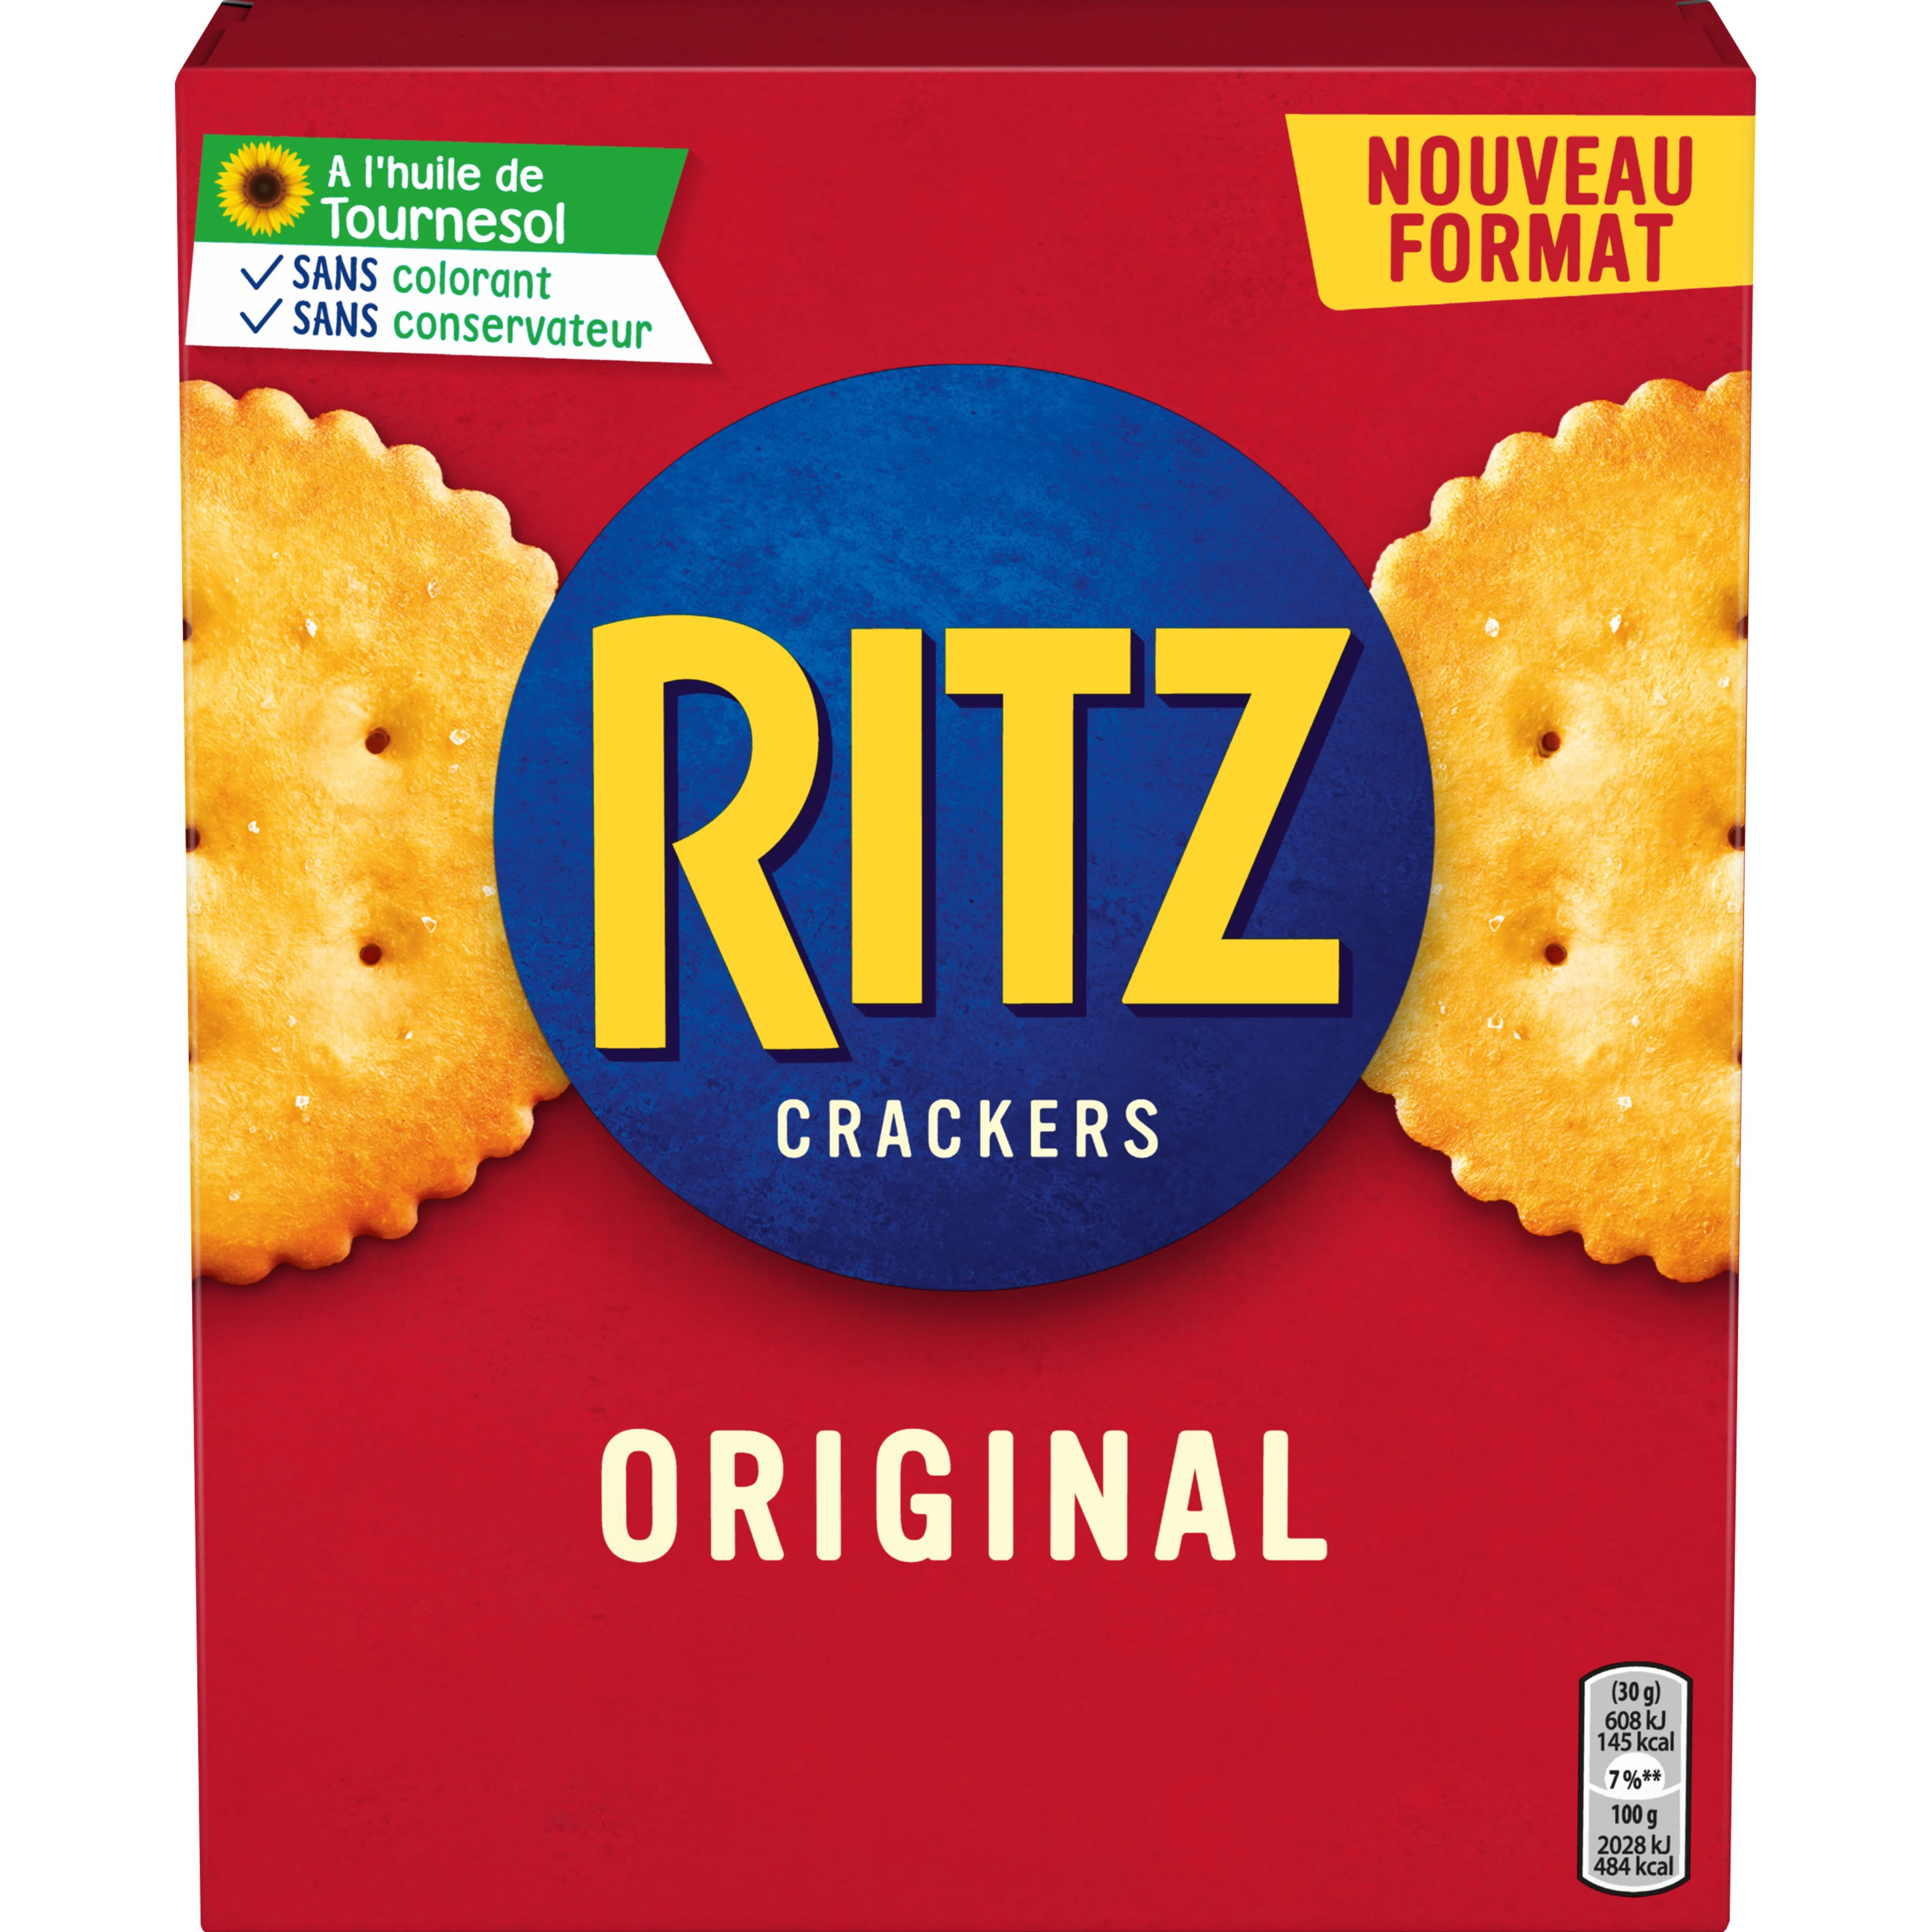 Crackers Original Aperitifkekse, 200g -  RITZ